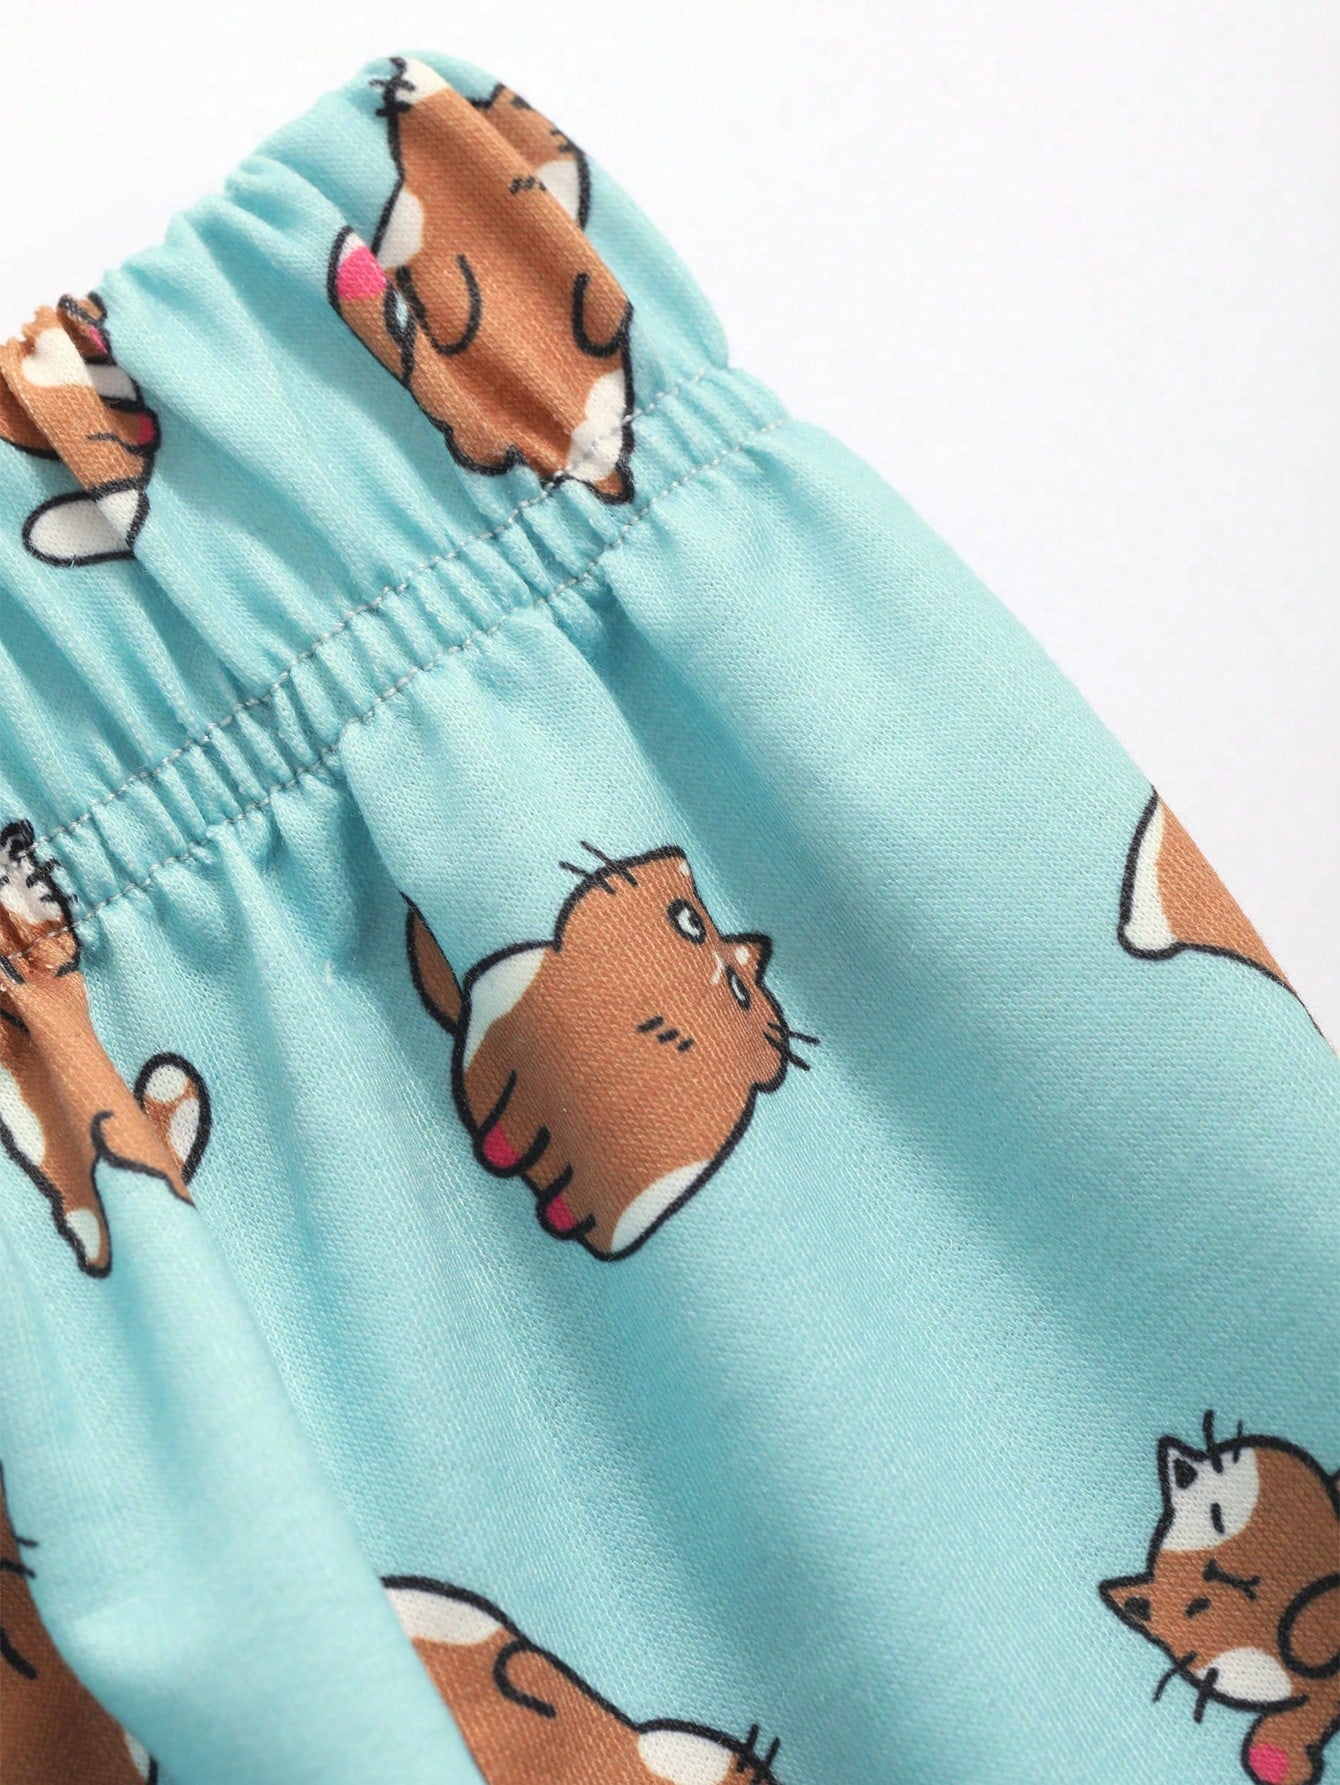 Cute Cat Patterned Casual Comfortable Pajama Pants